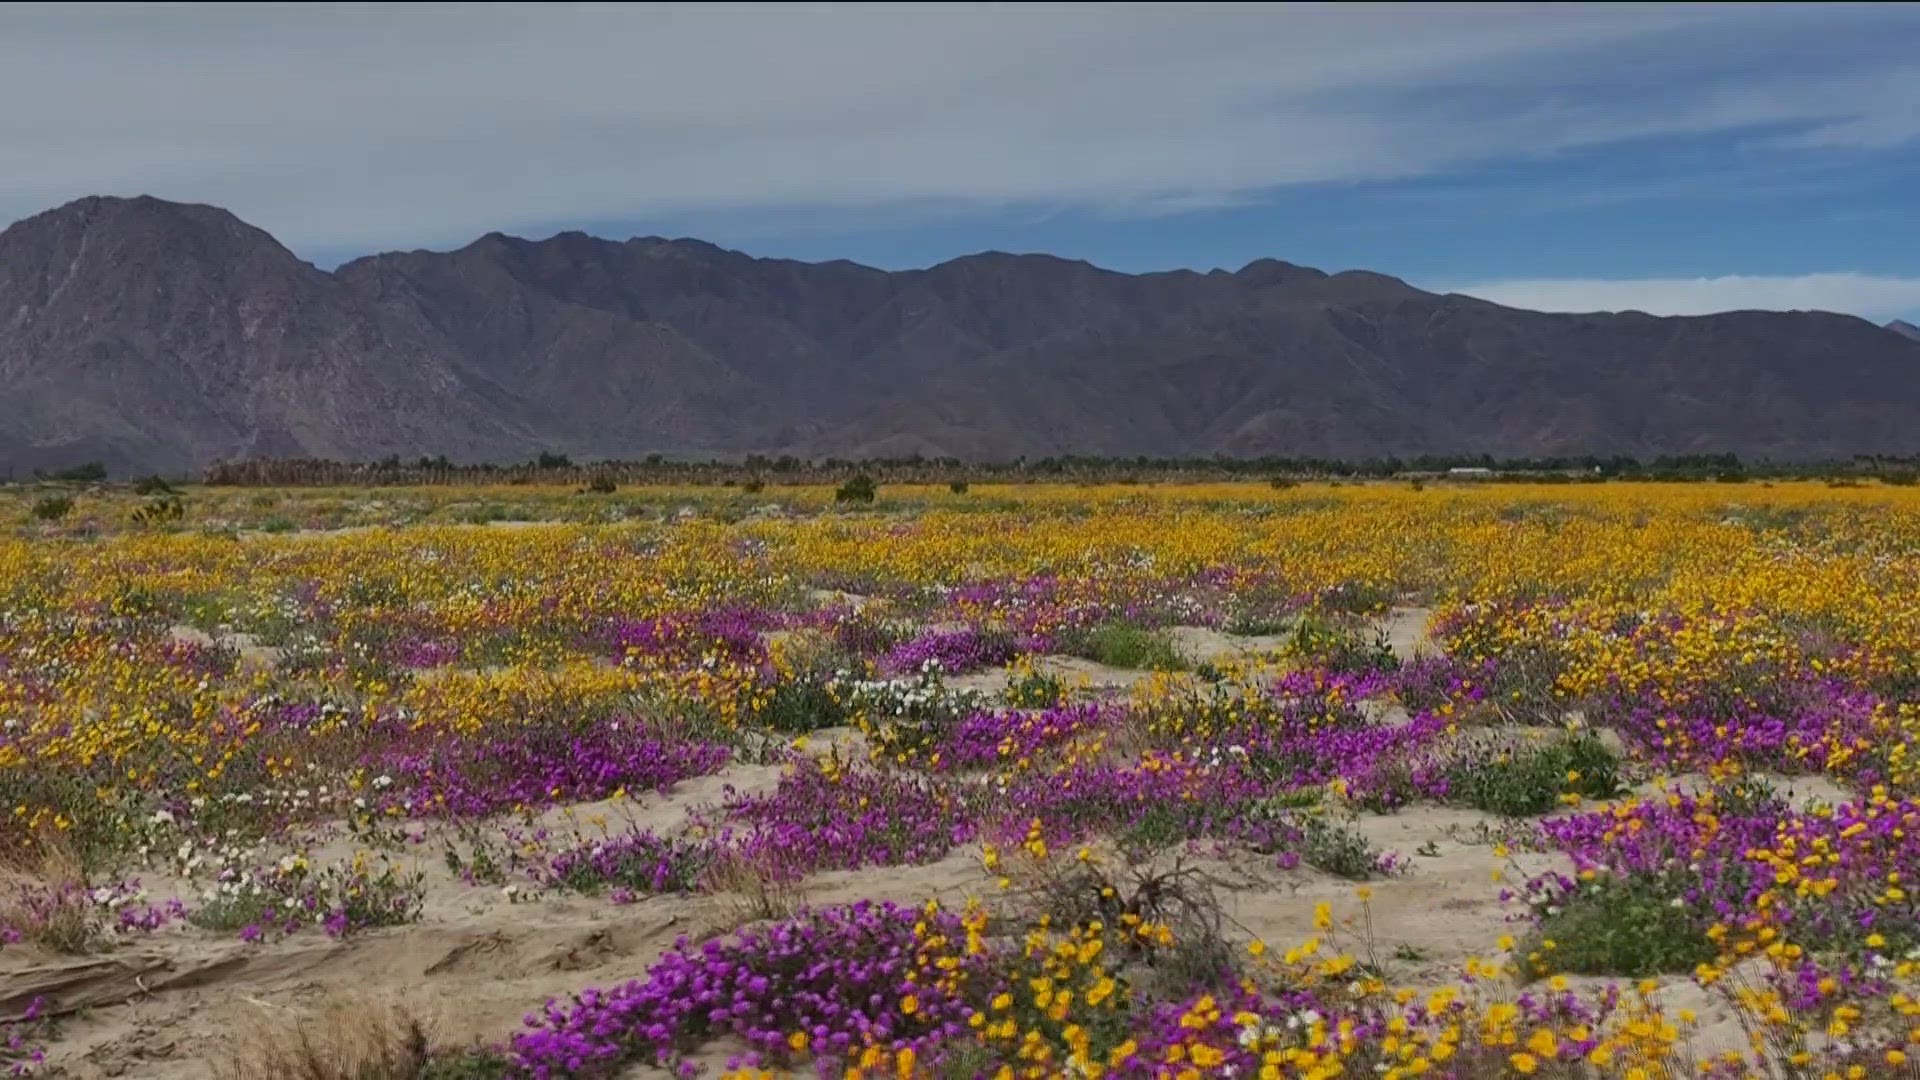 Anza-Borrego Desert State Park is seeing its biggest wildflower bloom in years